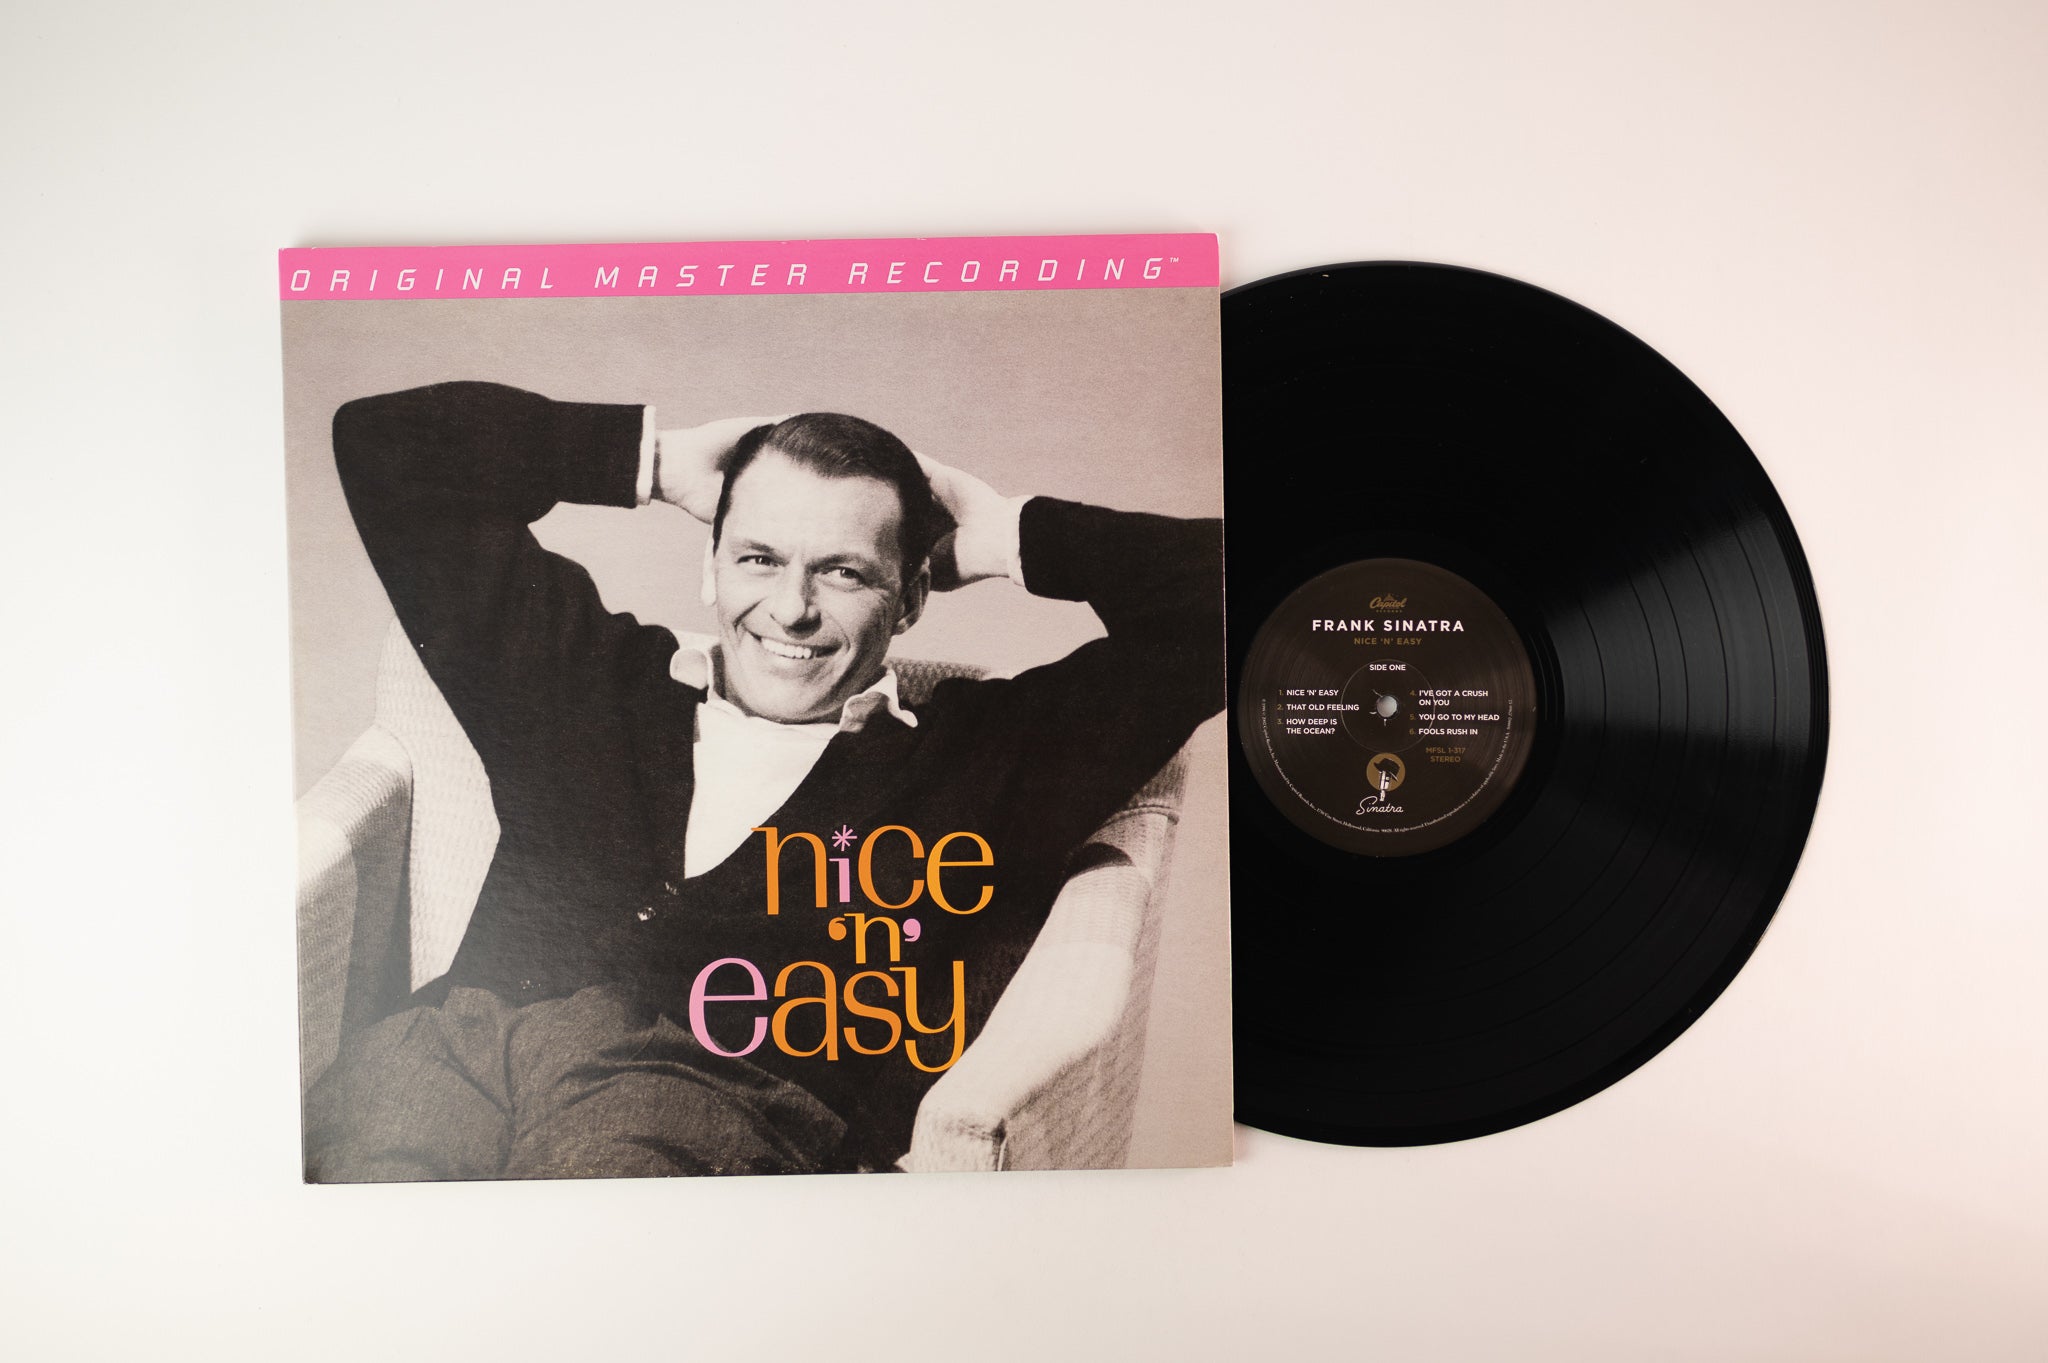 Frank Sinatra - Nice 'N' Easy on Mobile Fidelity Sound Lab